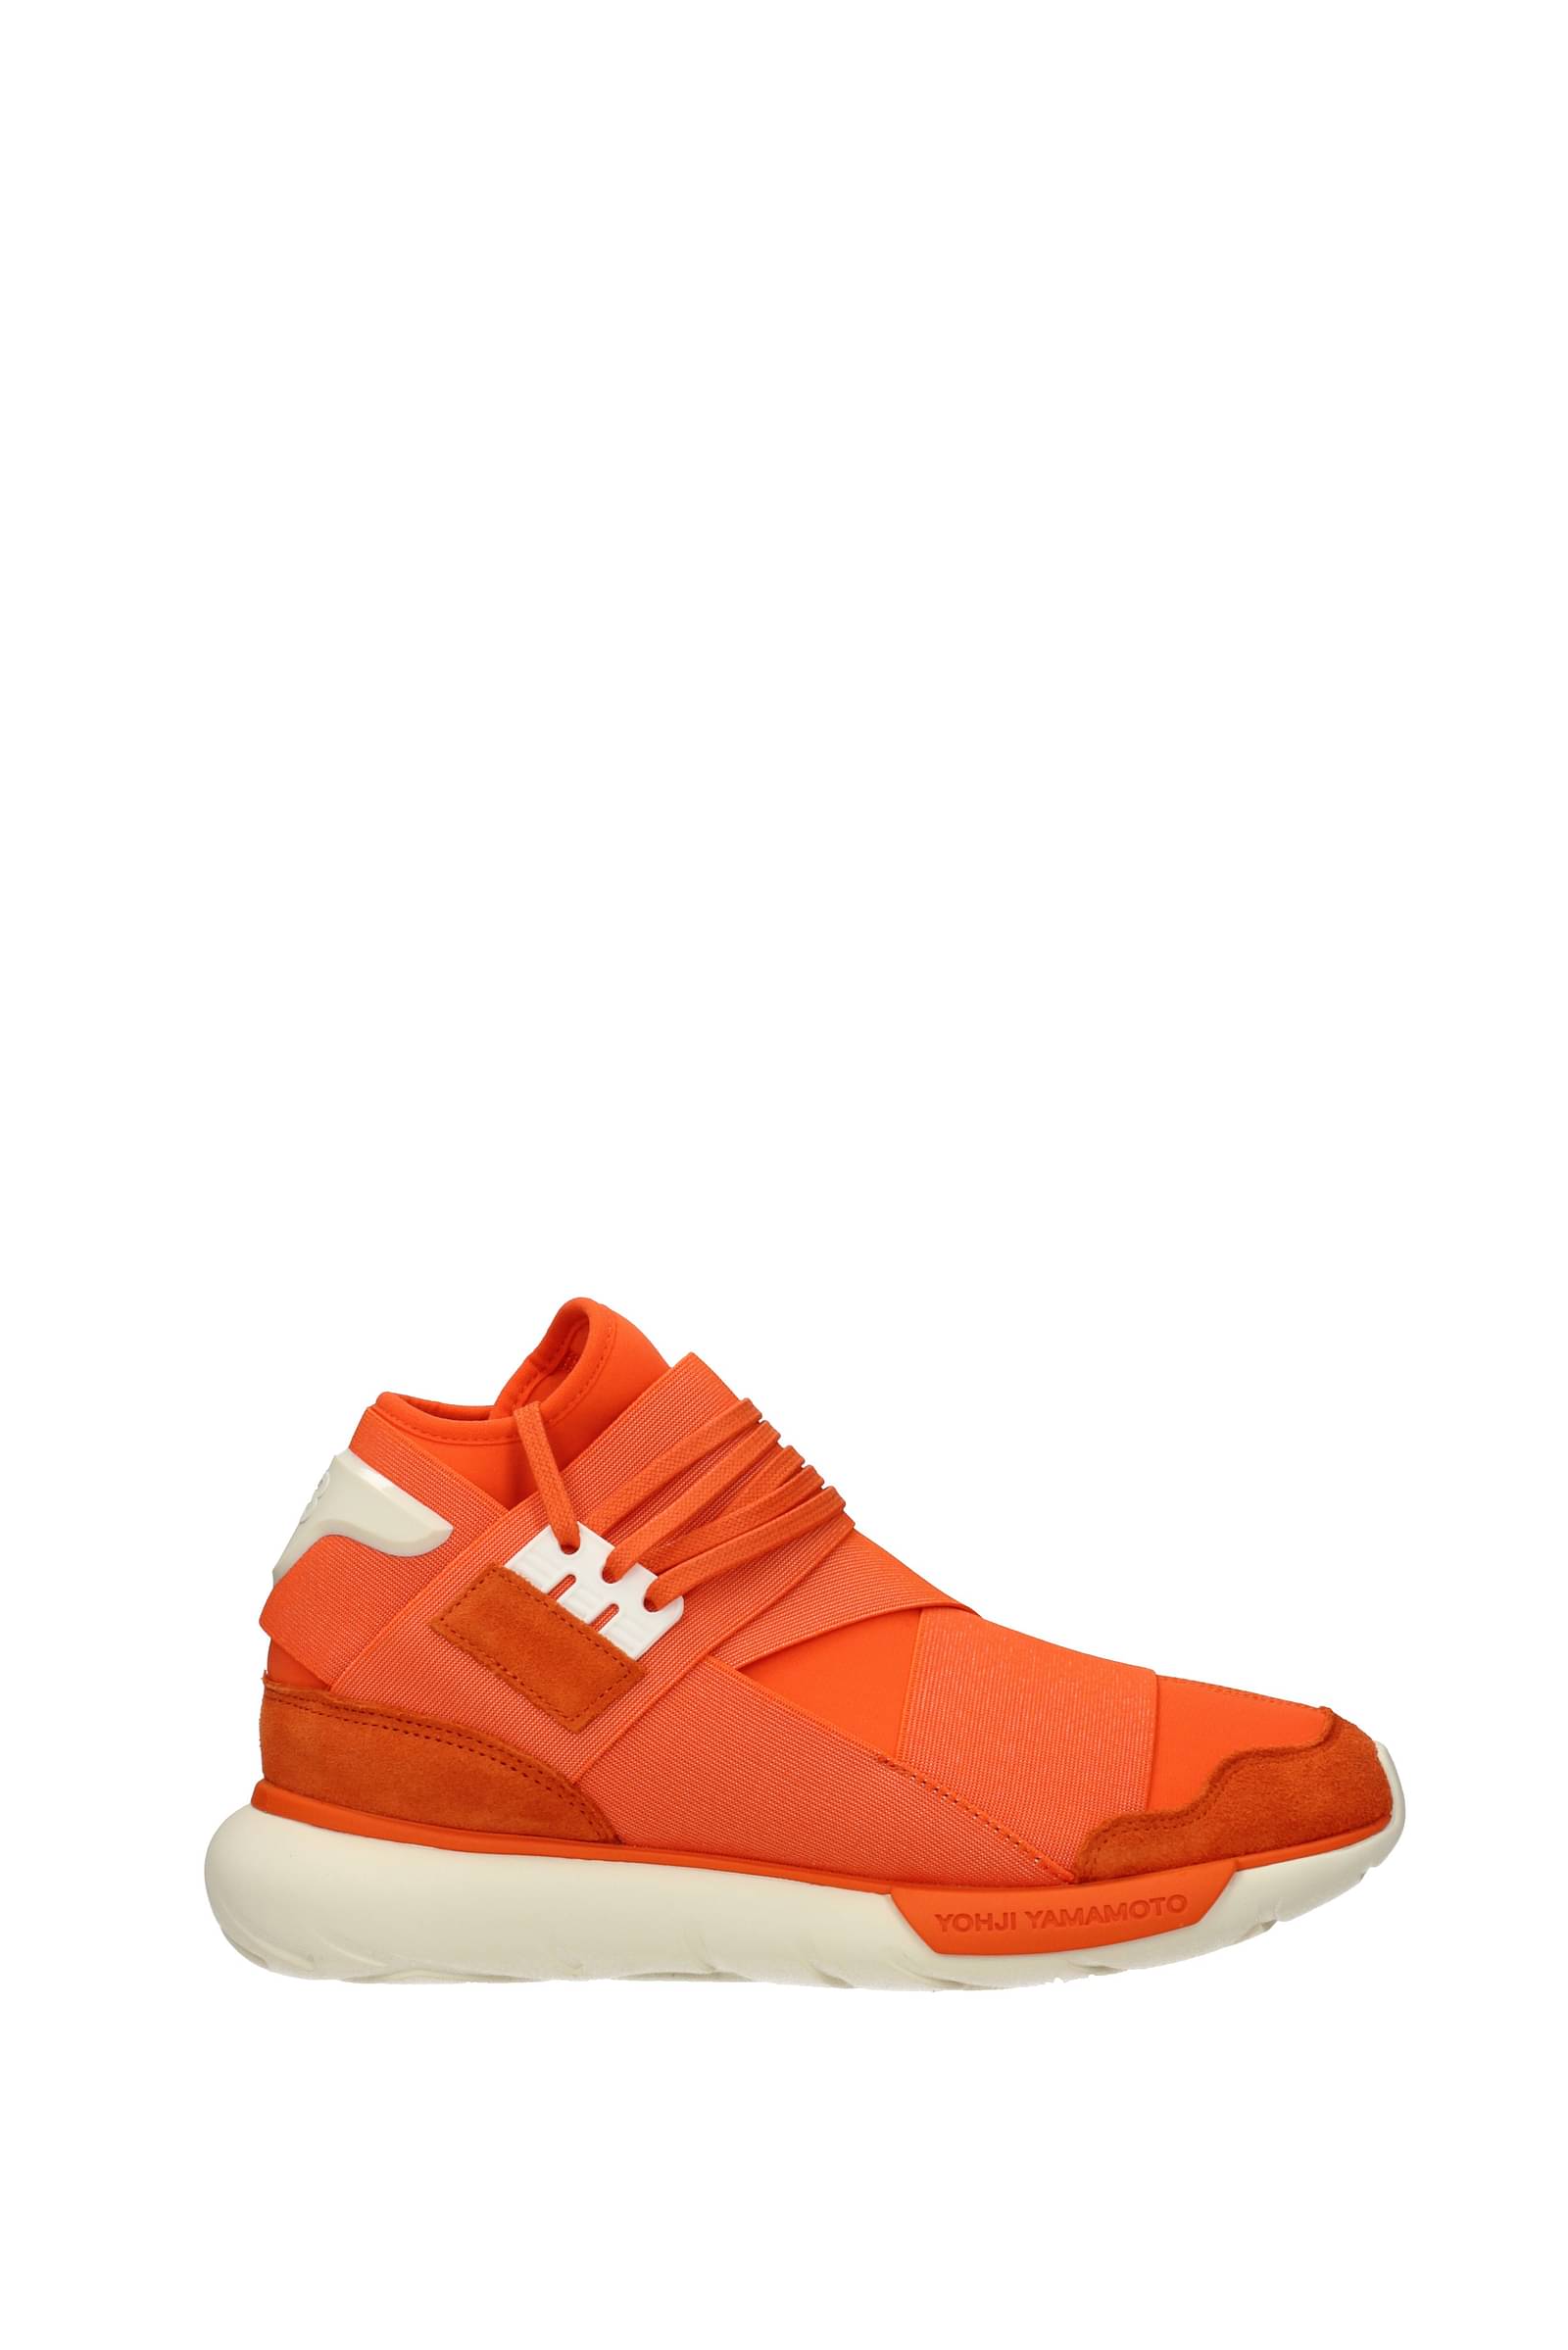 adidas adizero Ubersonic 4 Tennis Shoes - Orange | Women's Tennis | adidas  US